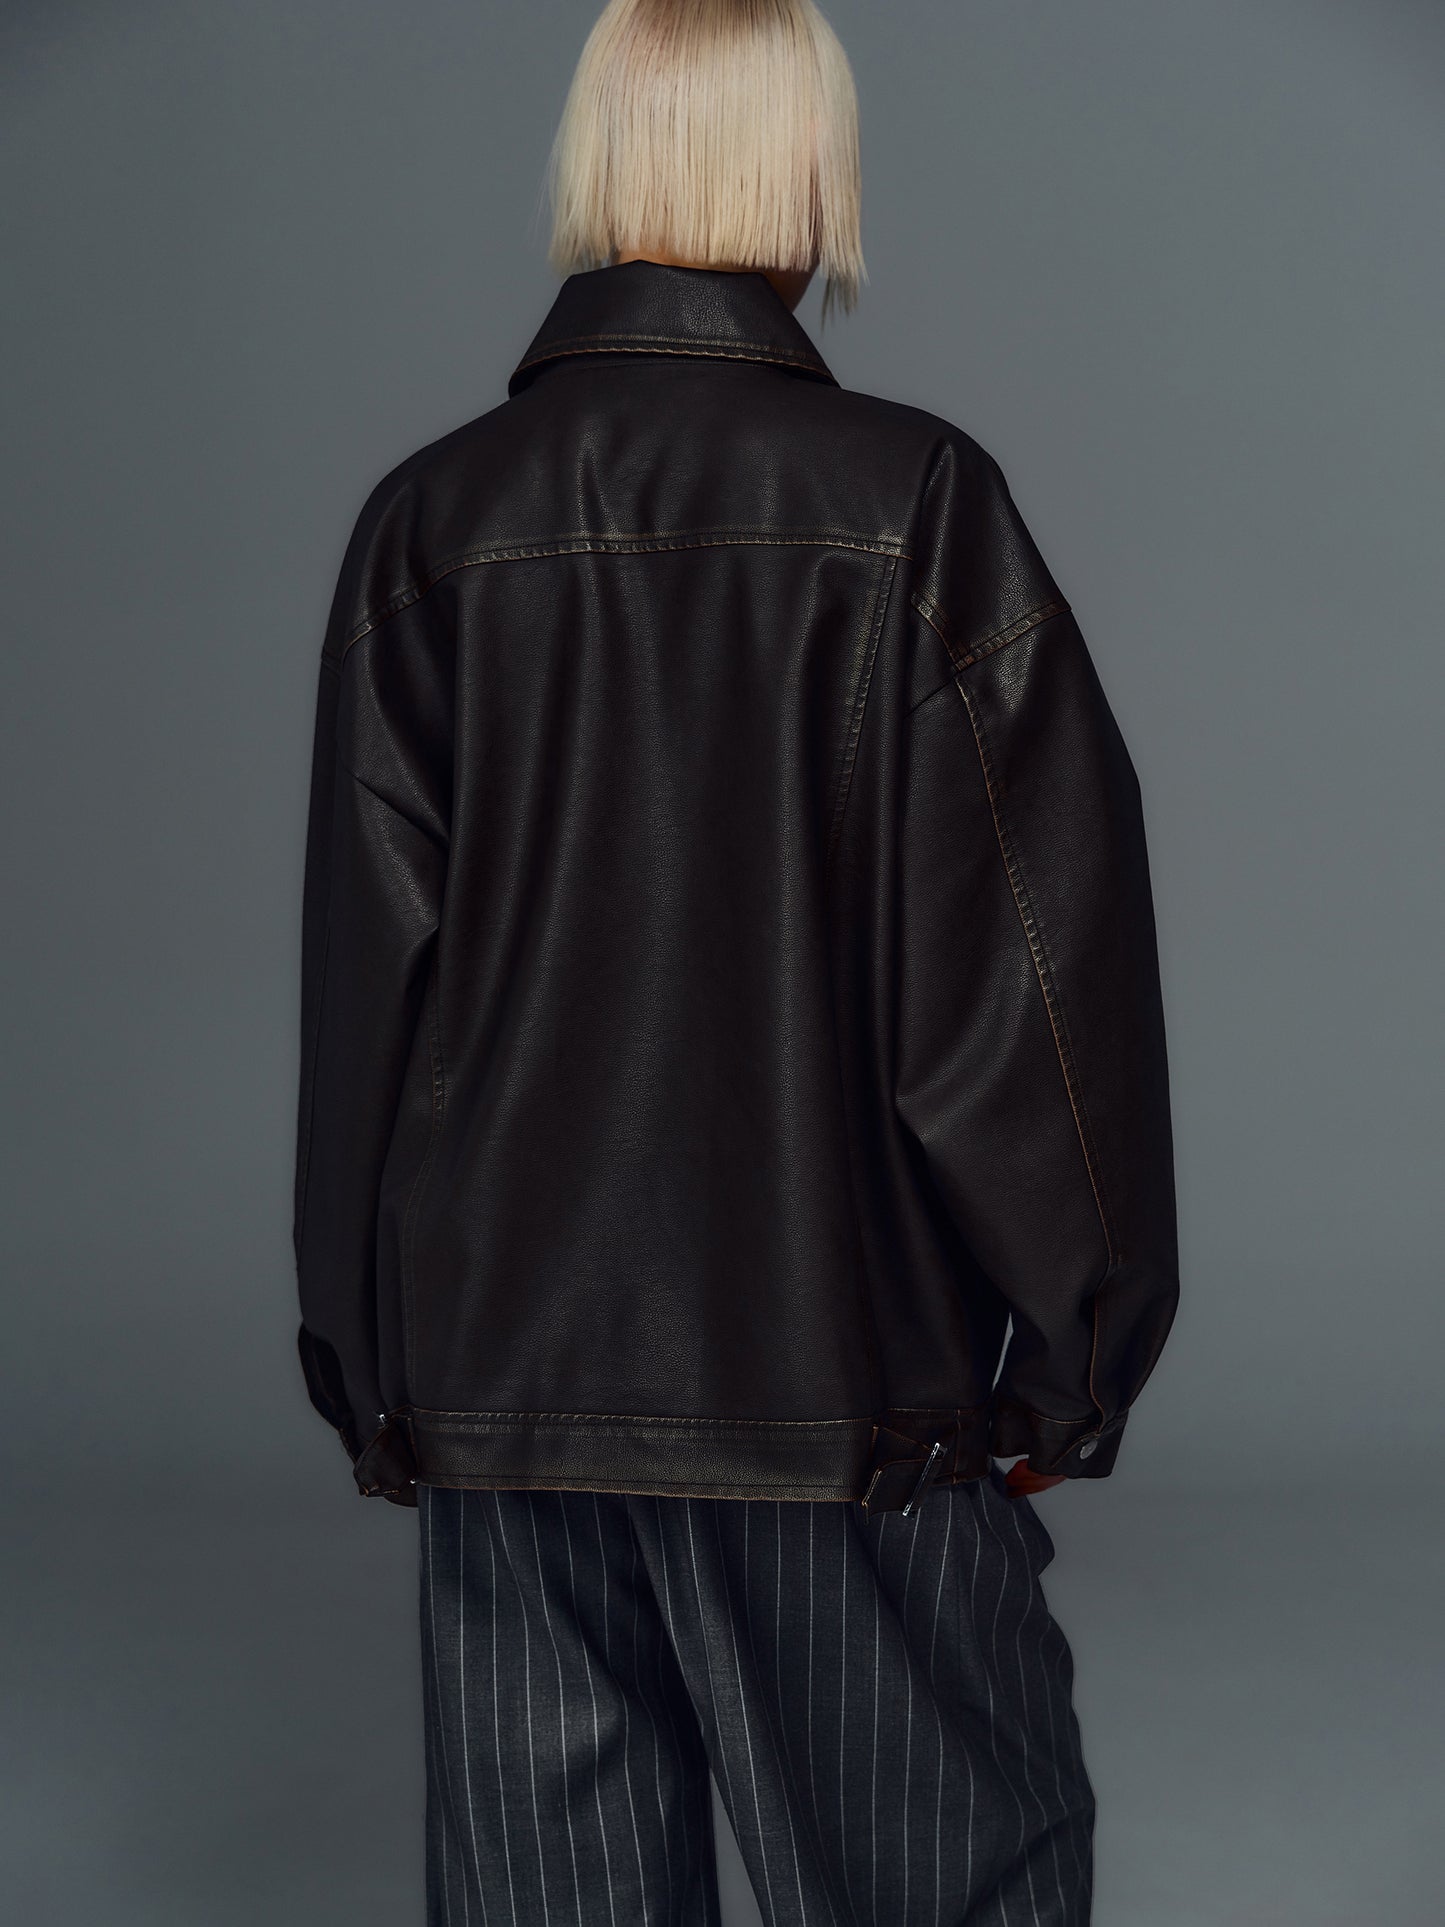 Vintage Effect Leather Jacket, Brown